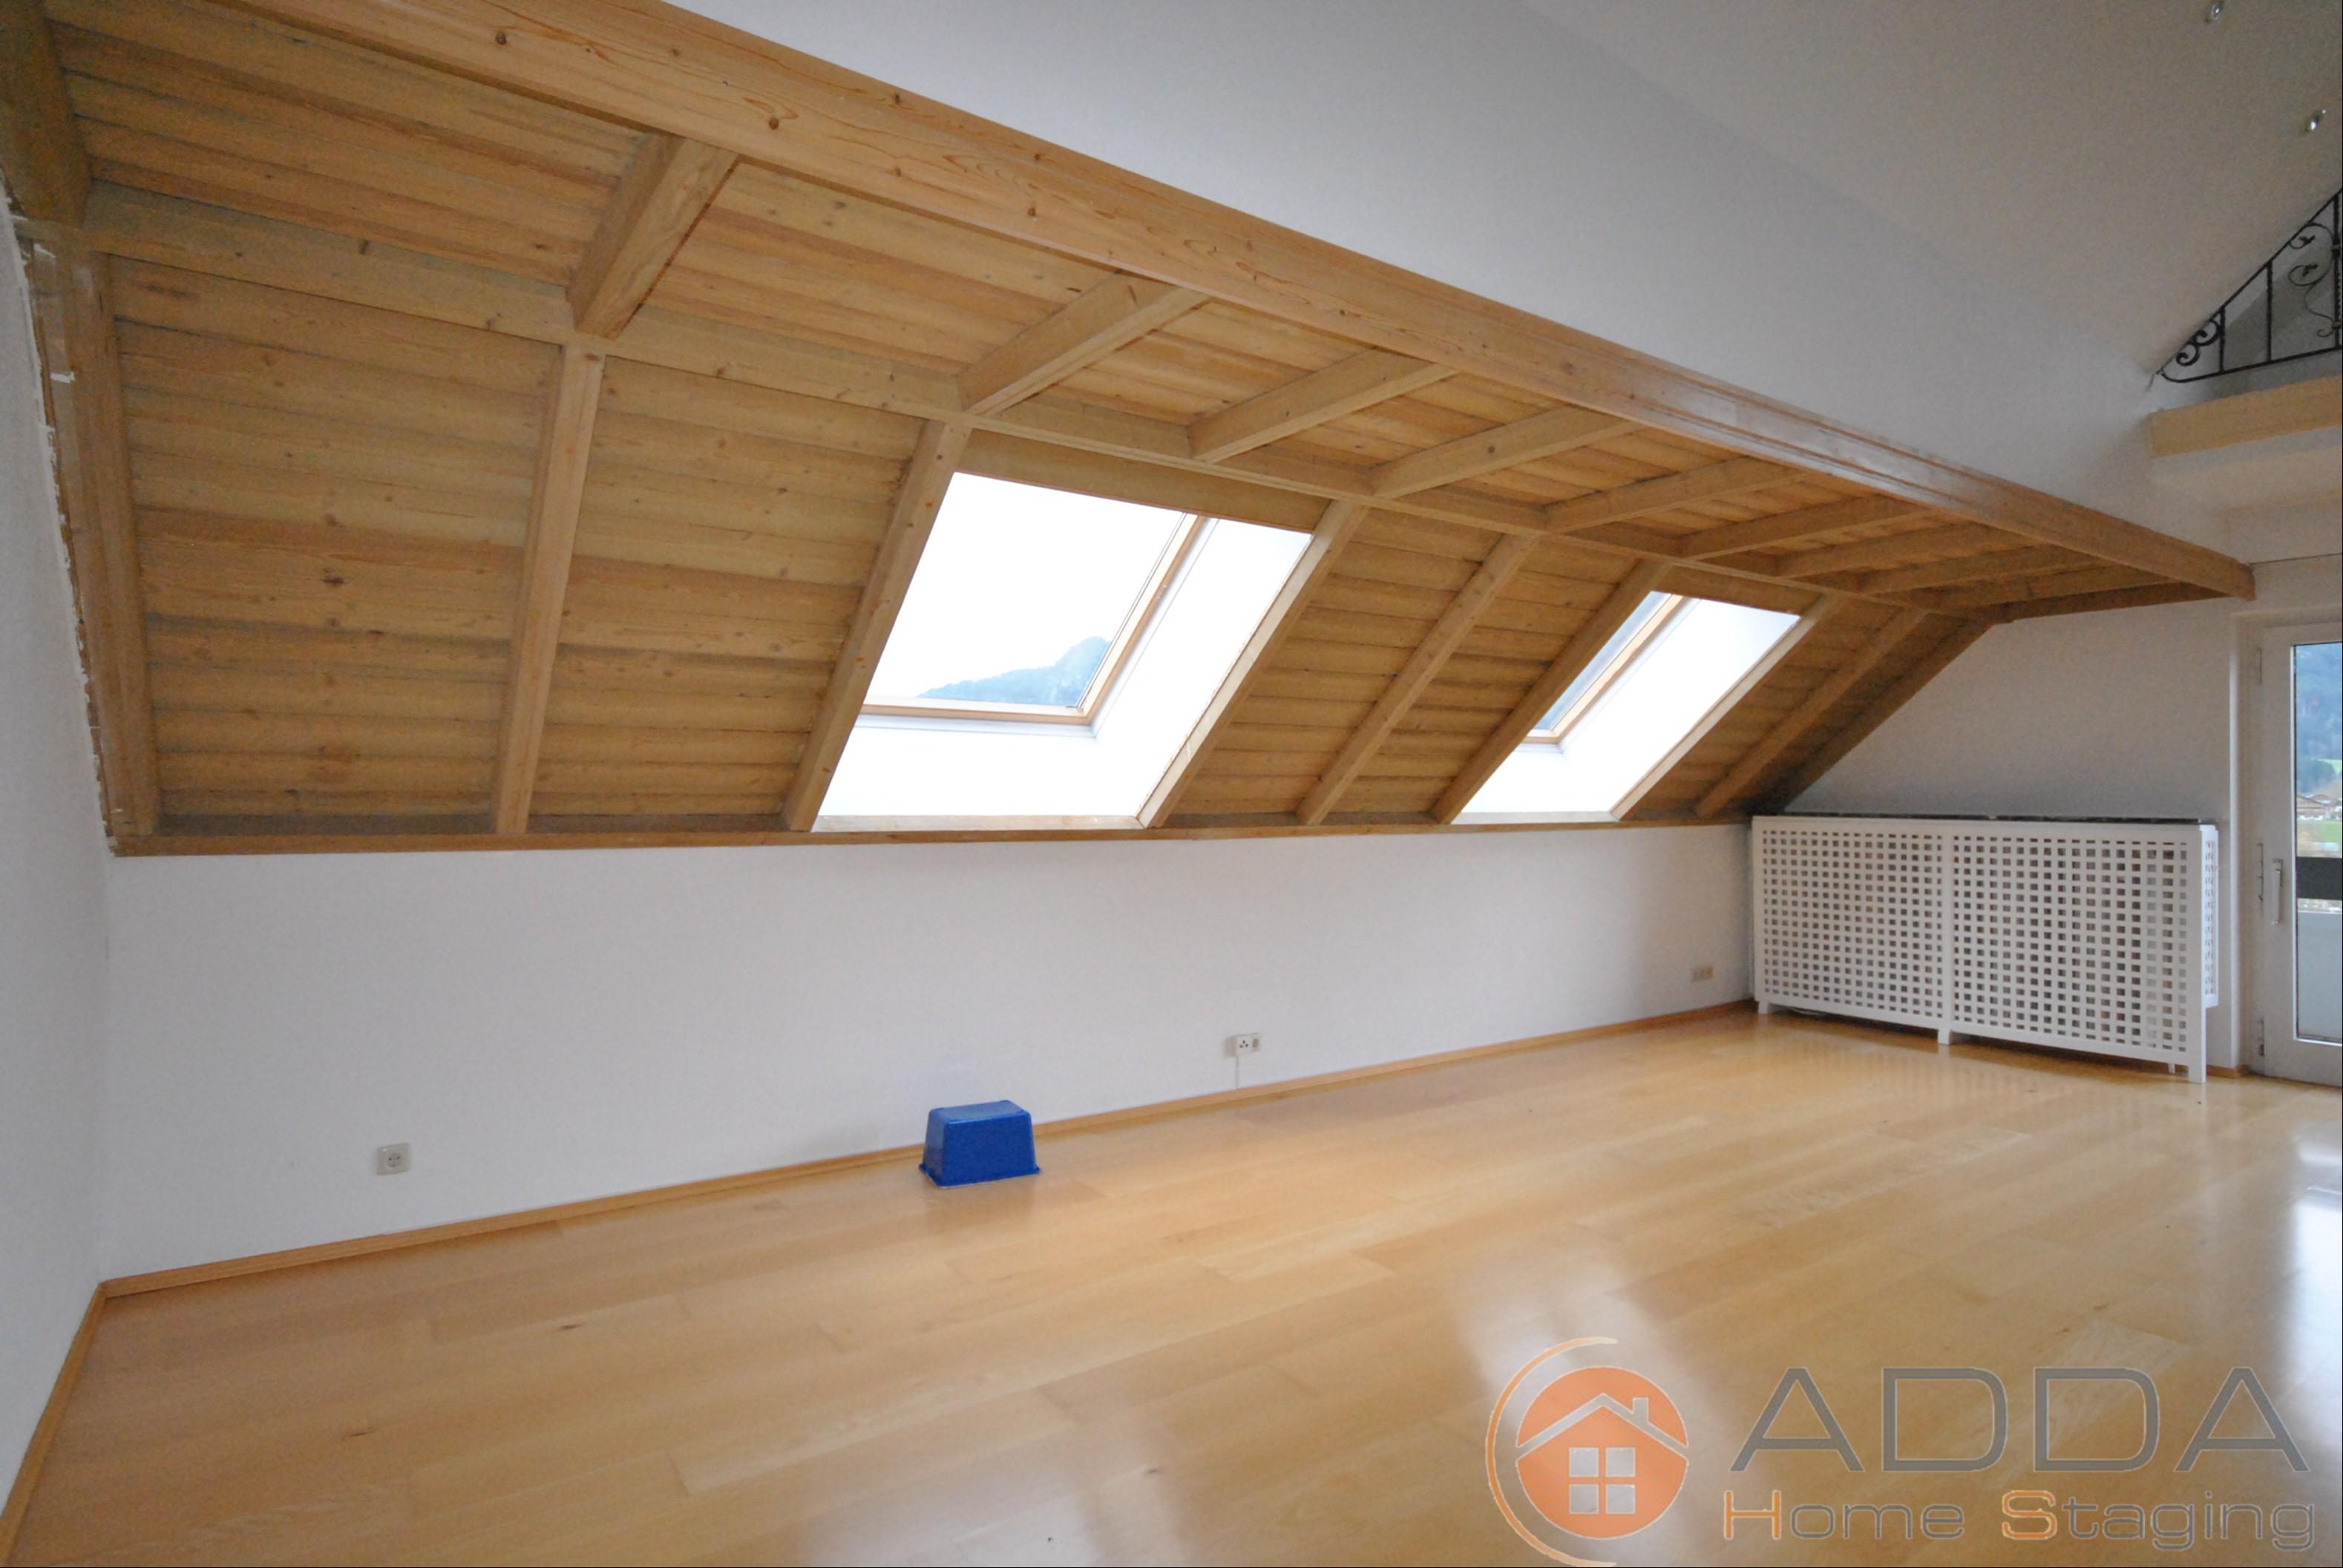 Leerer Wohnraum #raumgestaltung ©ADDA Home Staging